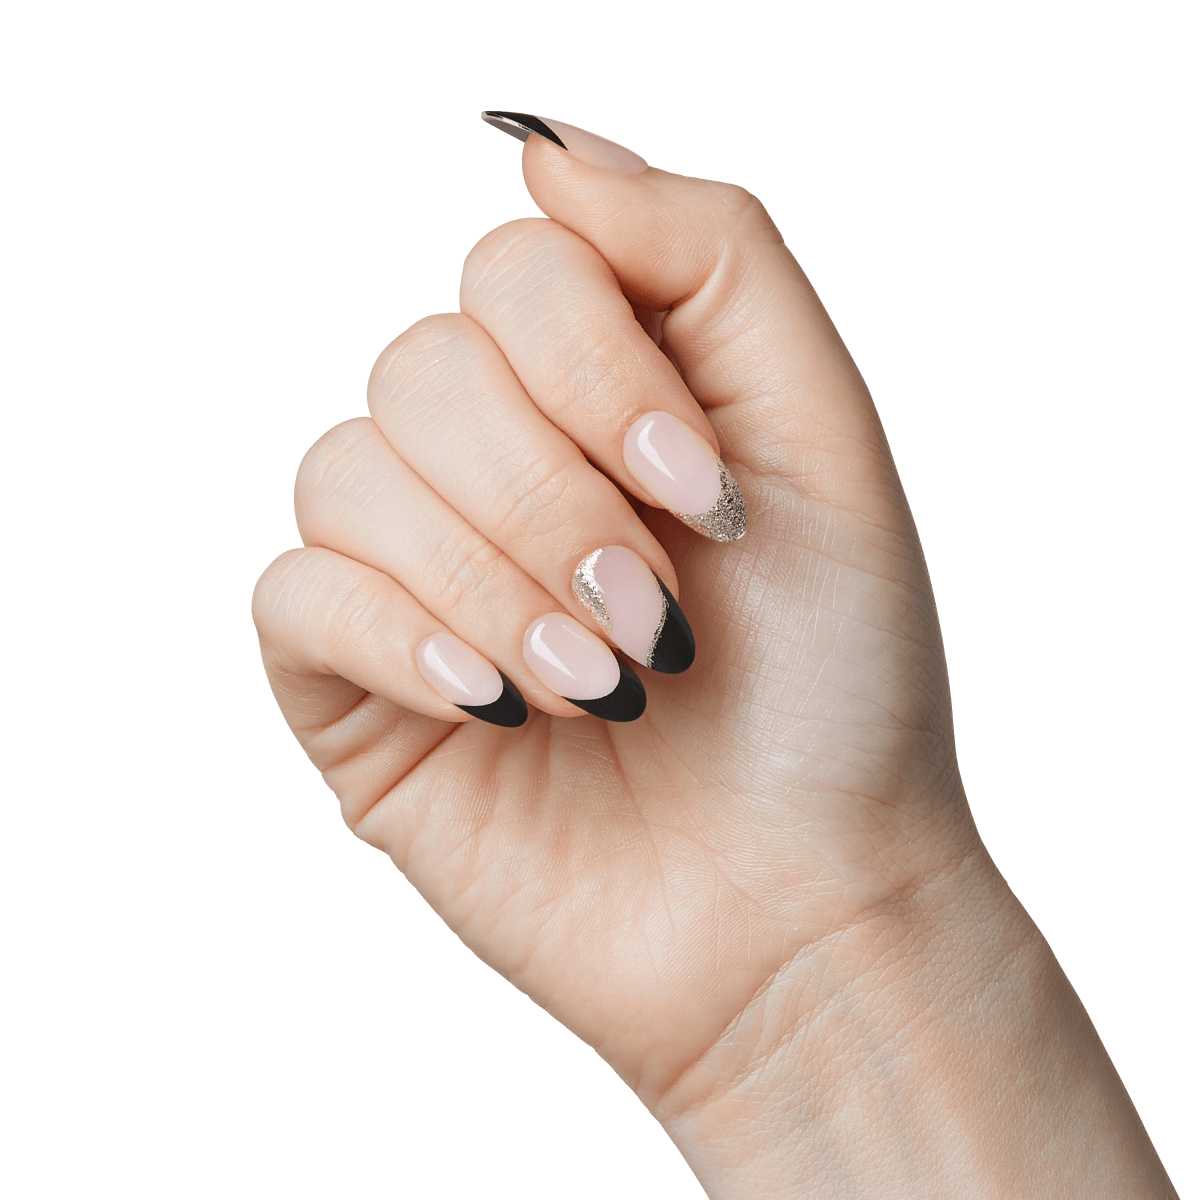 imPRESS Modern French Press-On Nails - Illusion